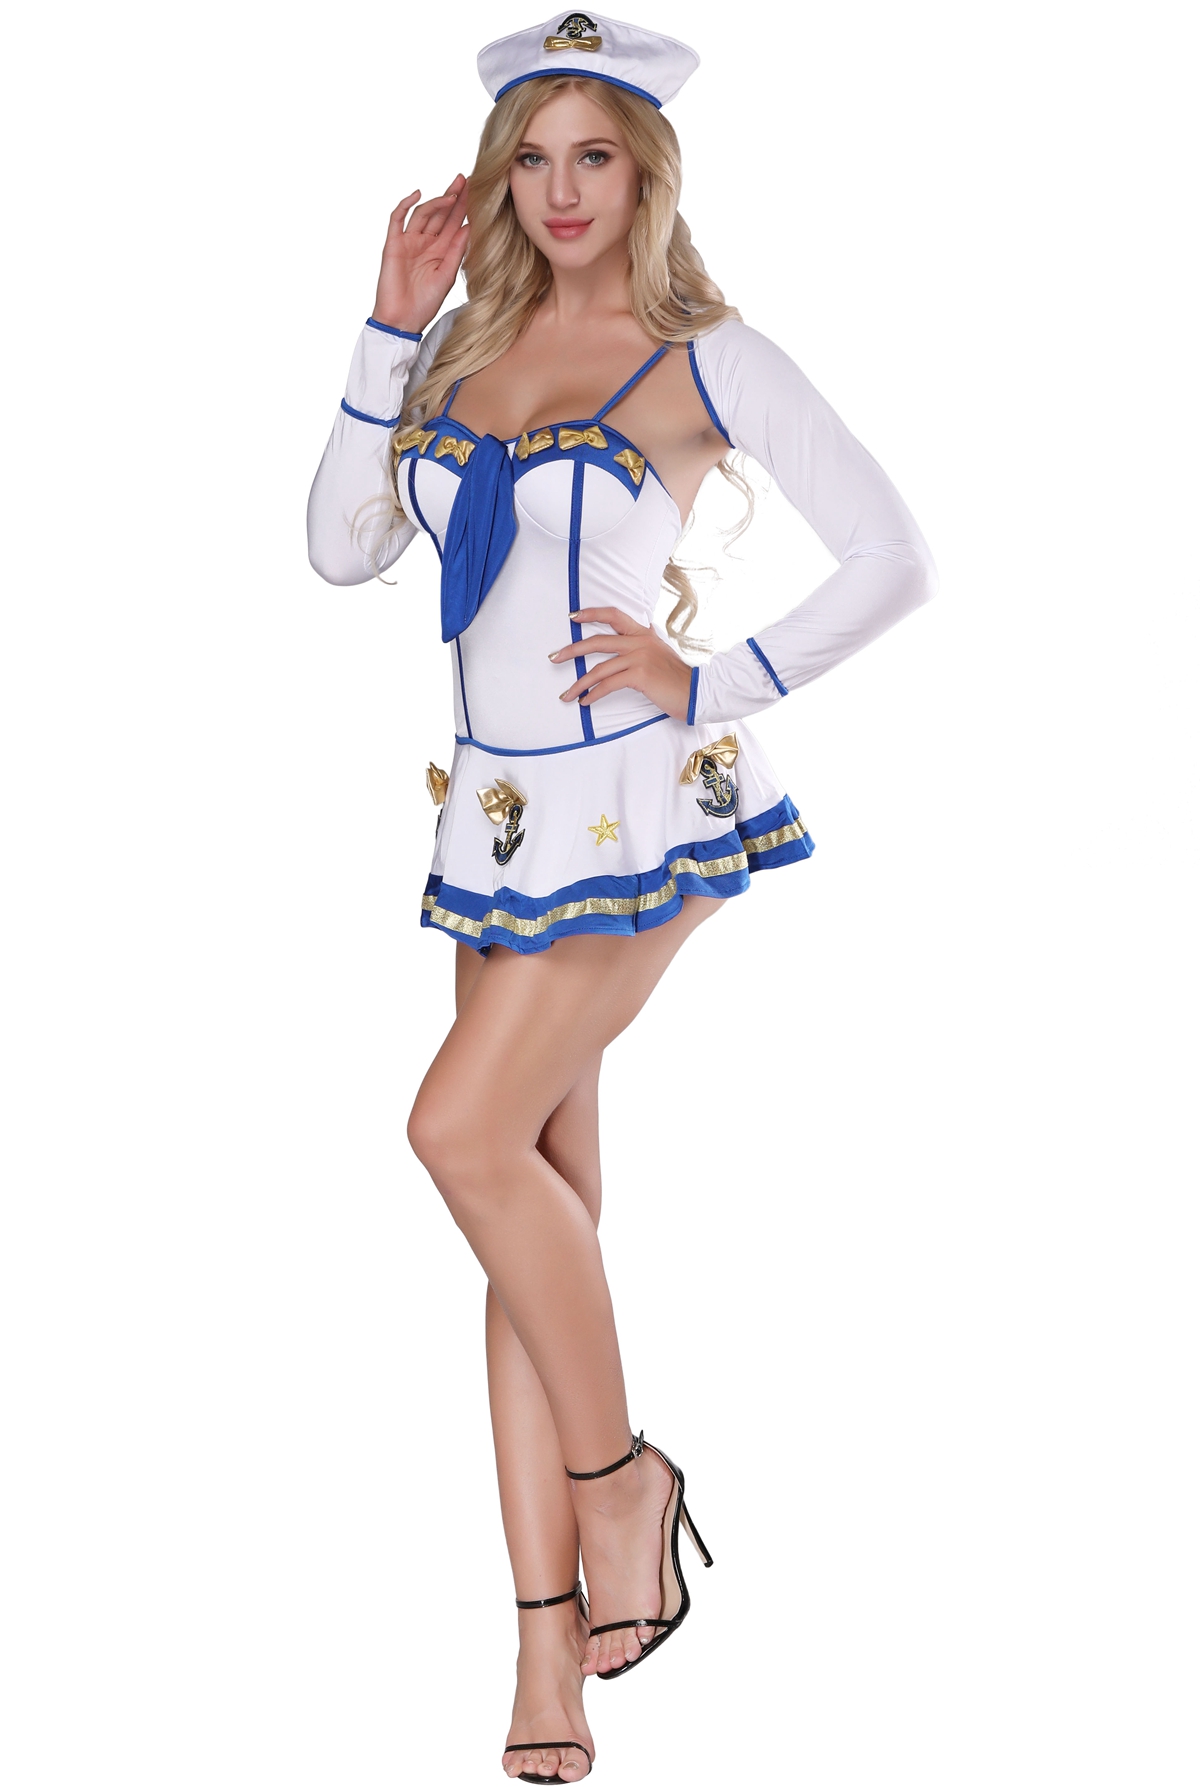 NF1189A Womens Sailor Costume Sexy Sailor Halloween Costume Captain Dress